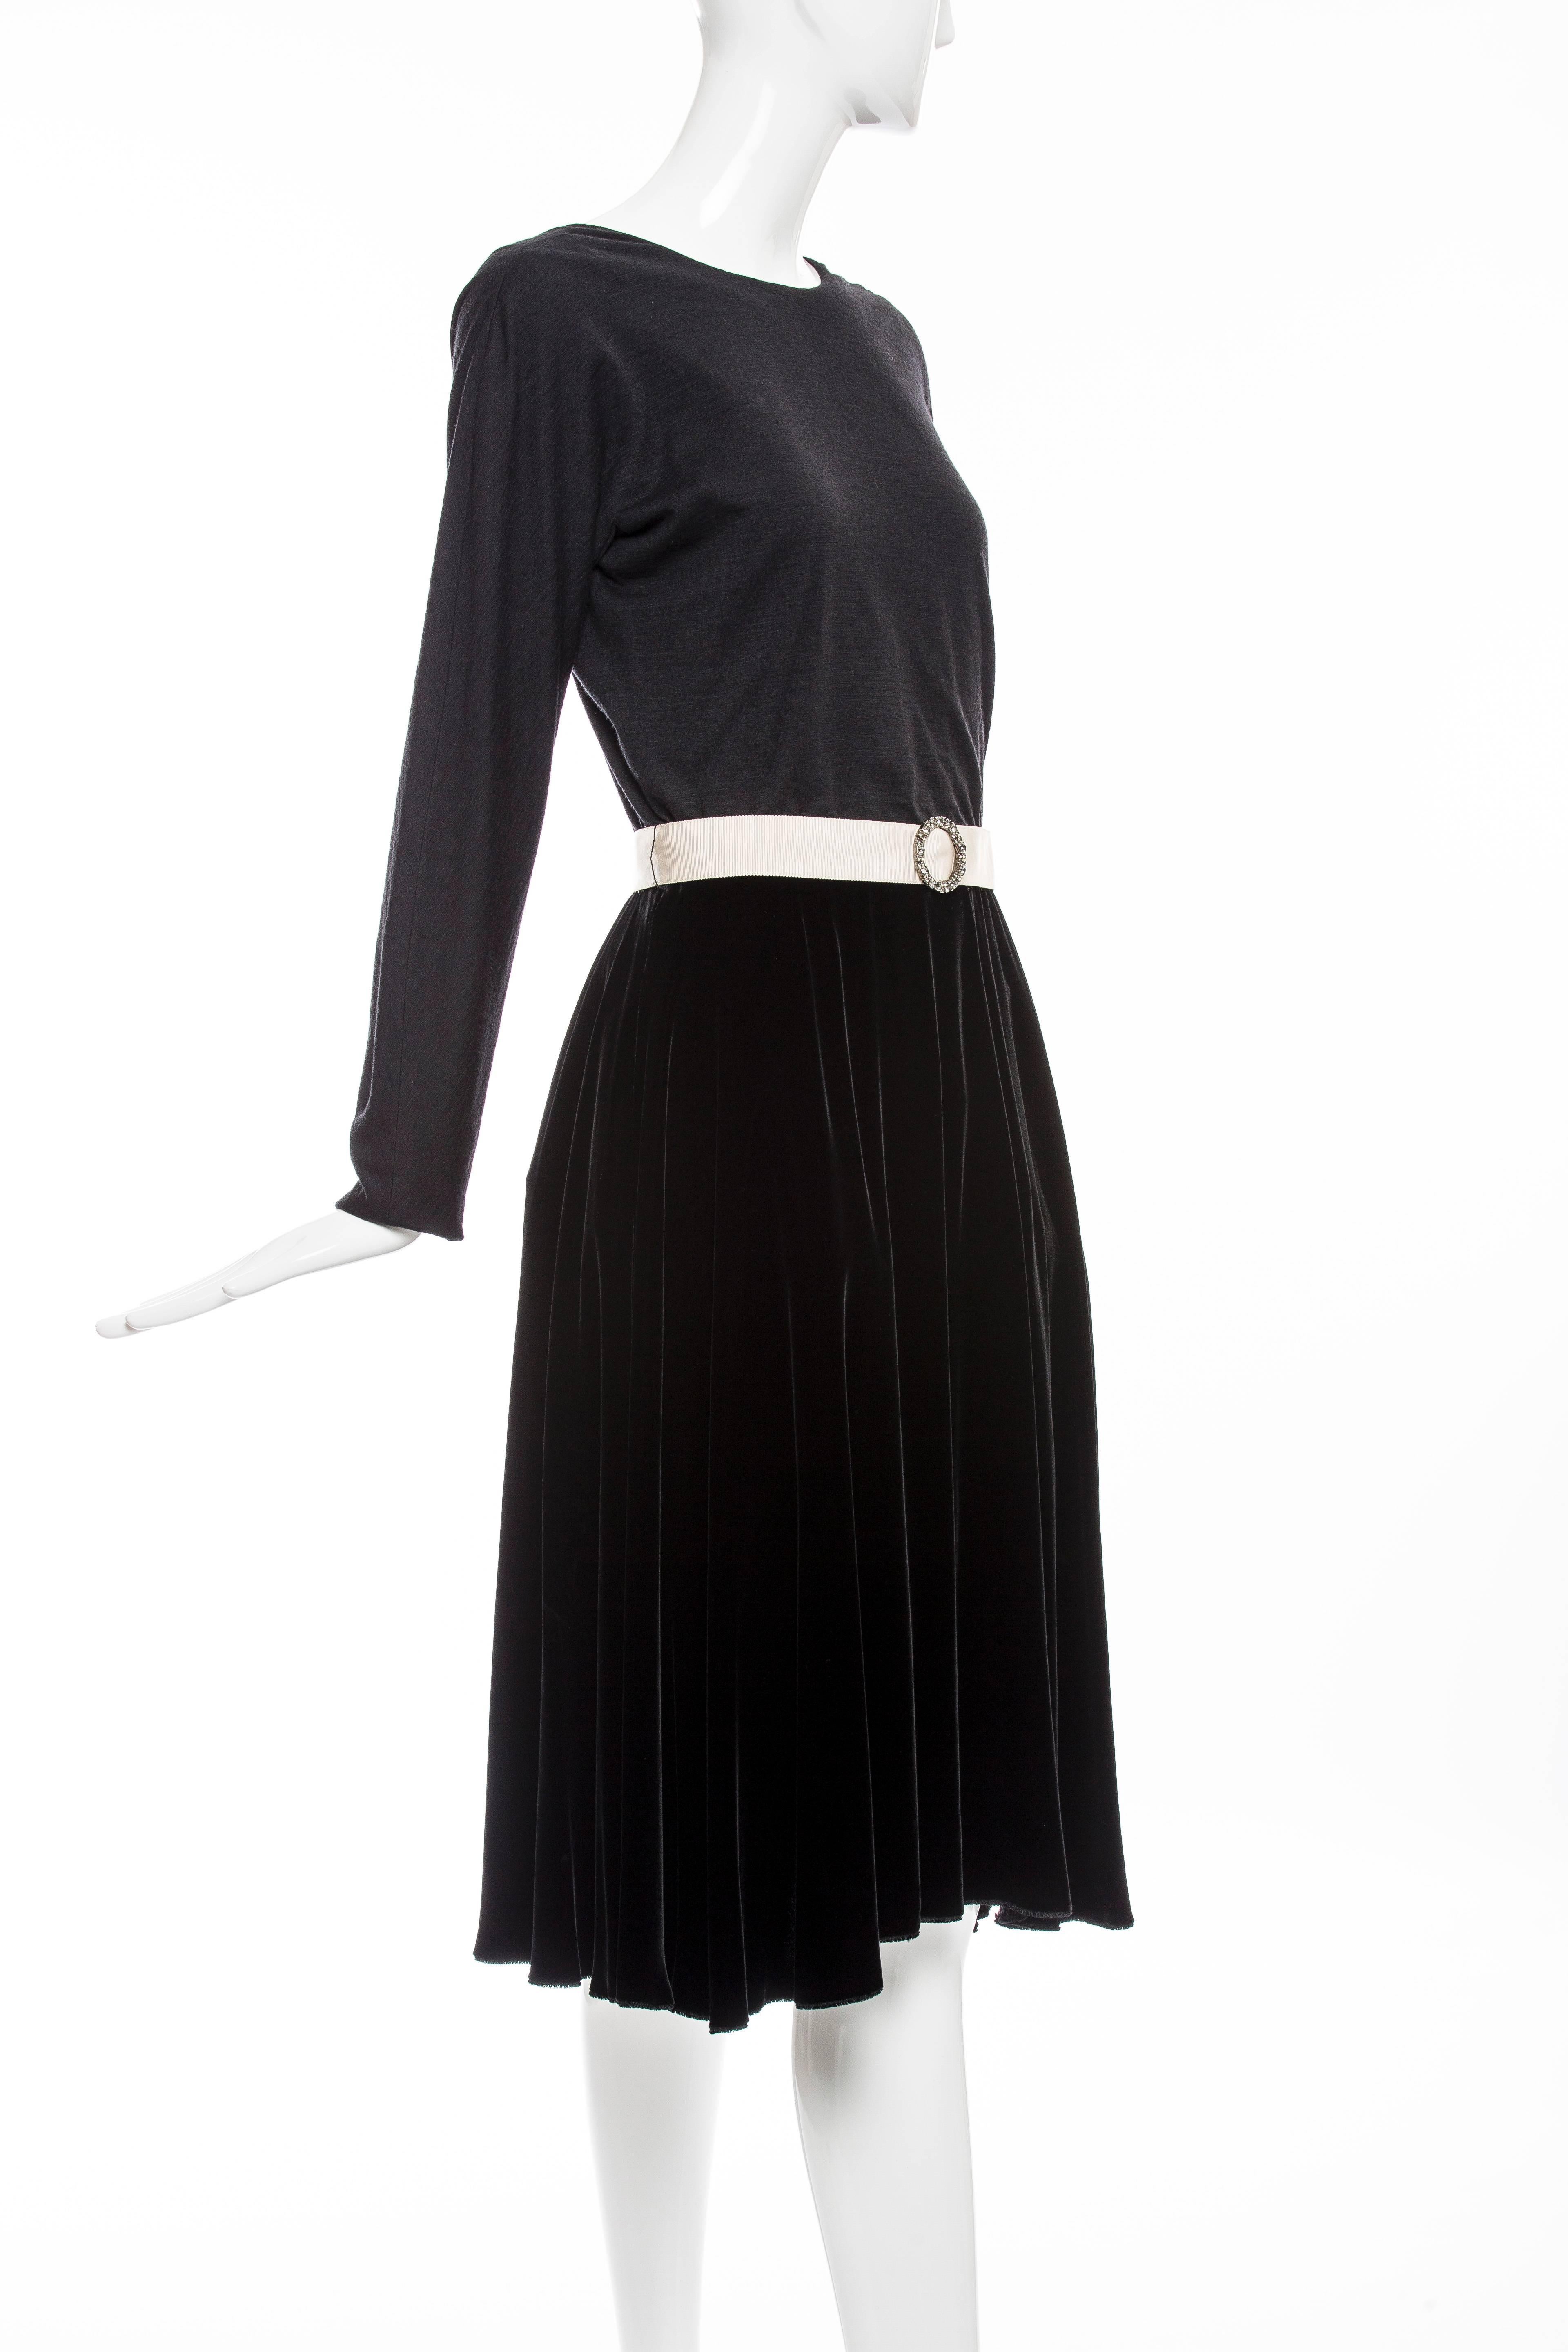 Lanvin Black Wool Jersey Silk Velvet Evening Dress,  Fall 2006 For Sale 4